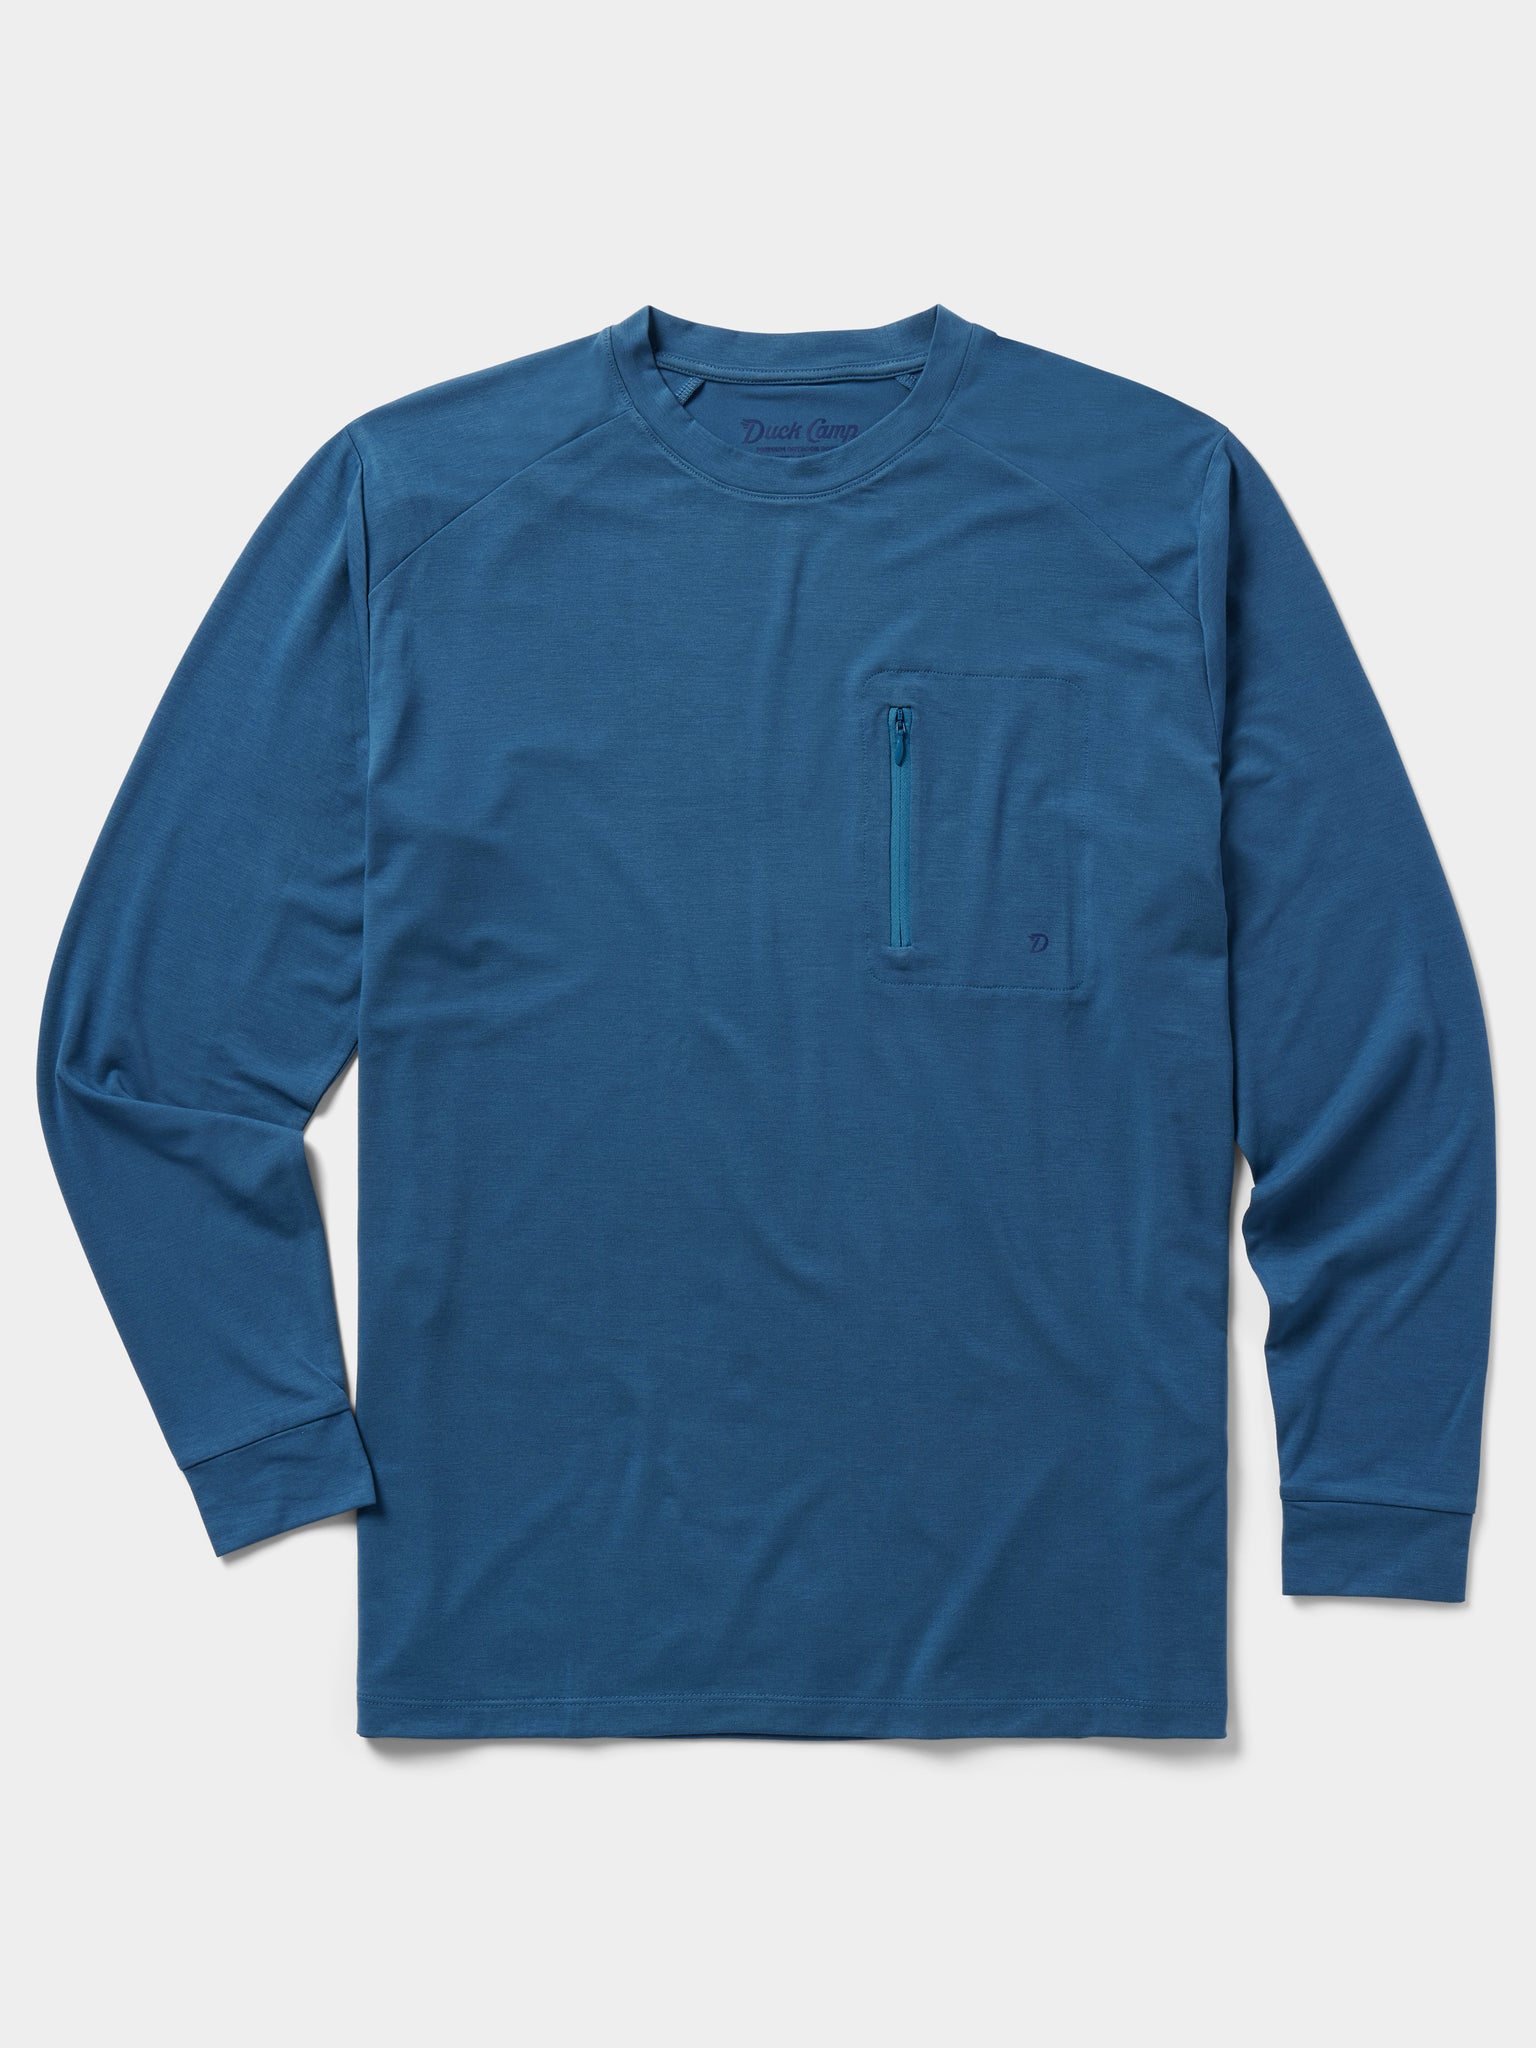 Field & Stream Men's XXL Fishing Shirt Smart Cool Long Sleeve Vented Blue